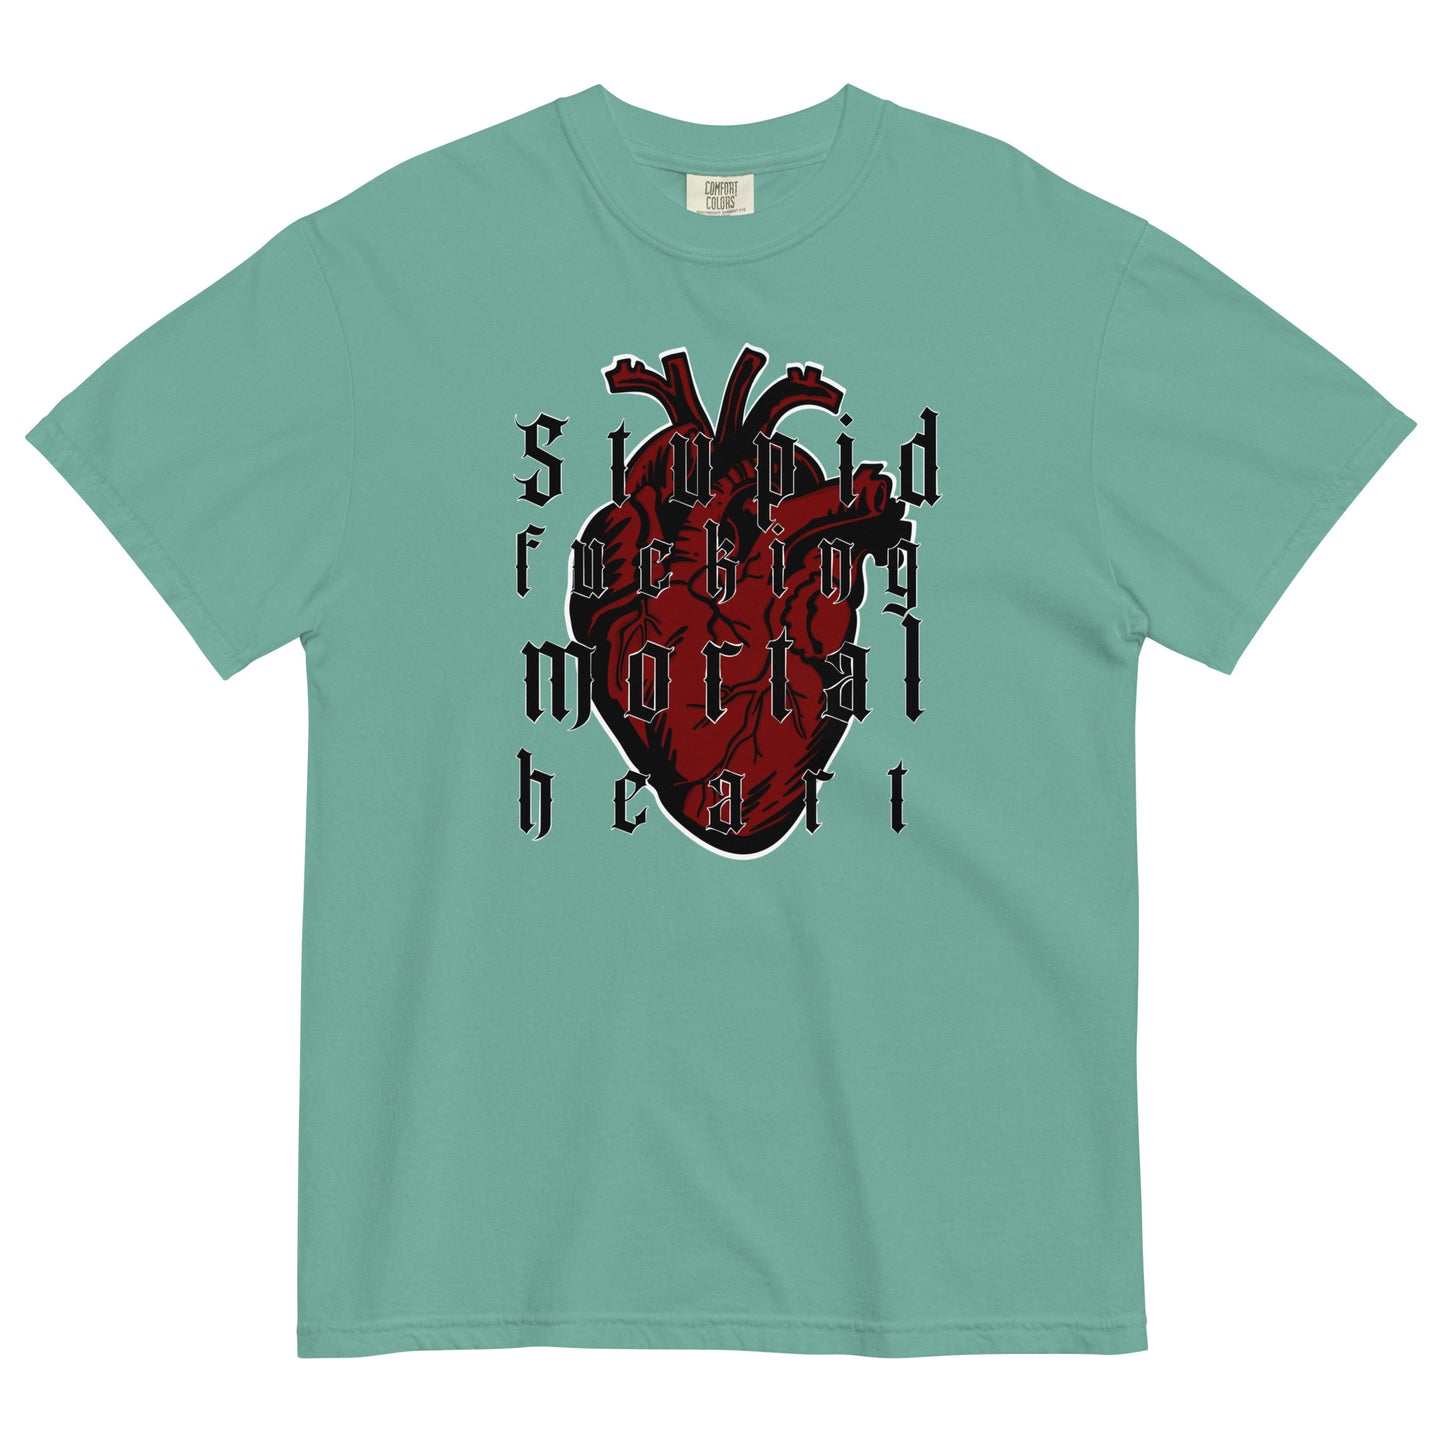 Stupid F-ing Mortal Heart heavyweight t-shirt